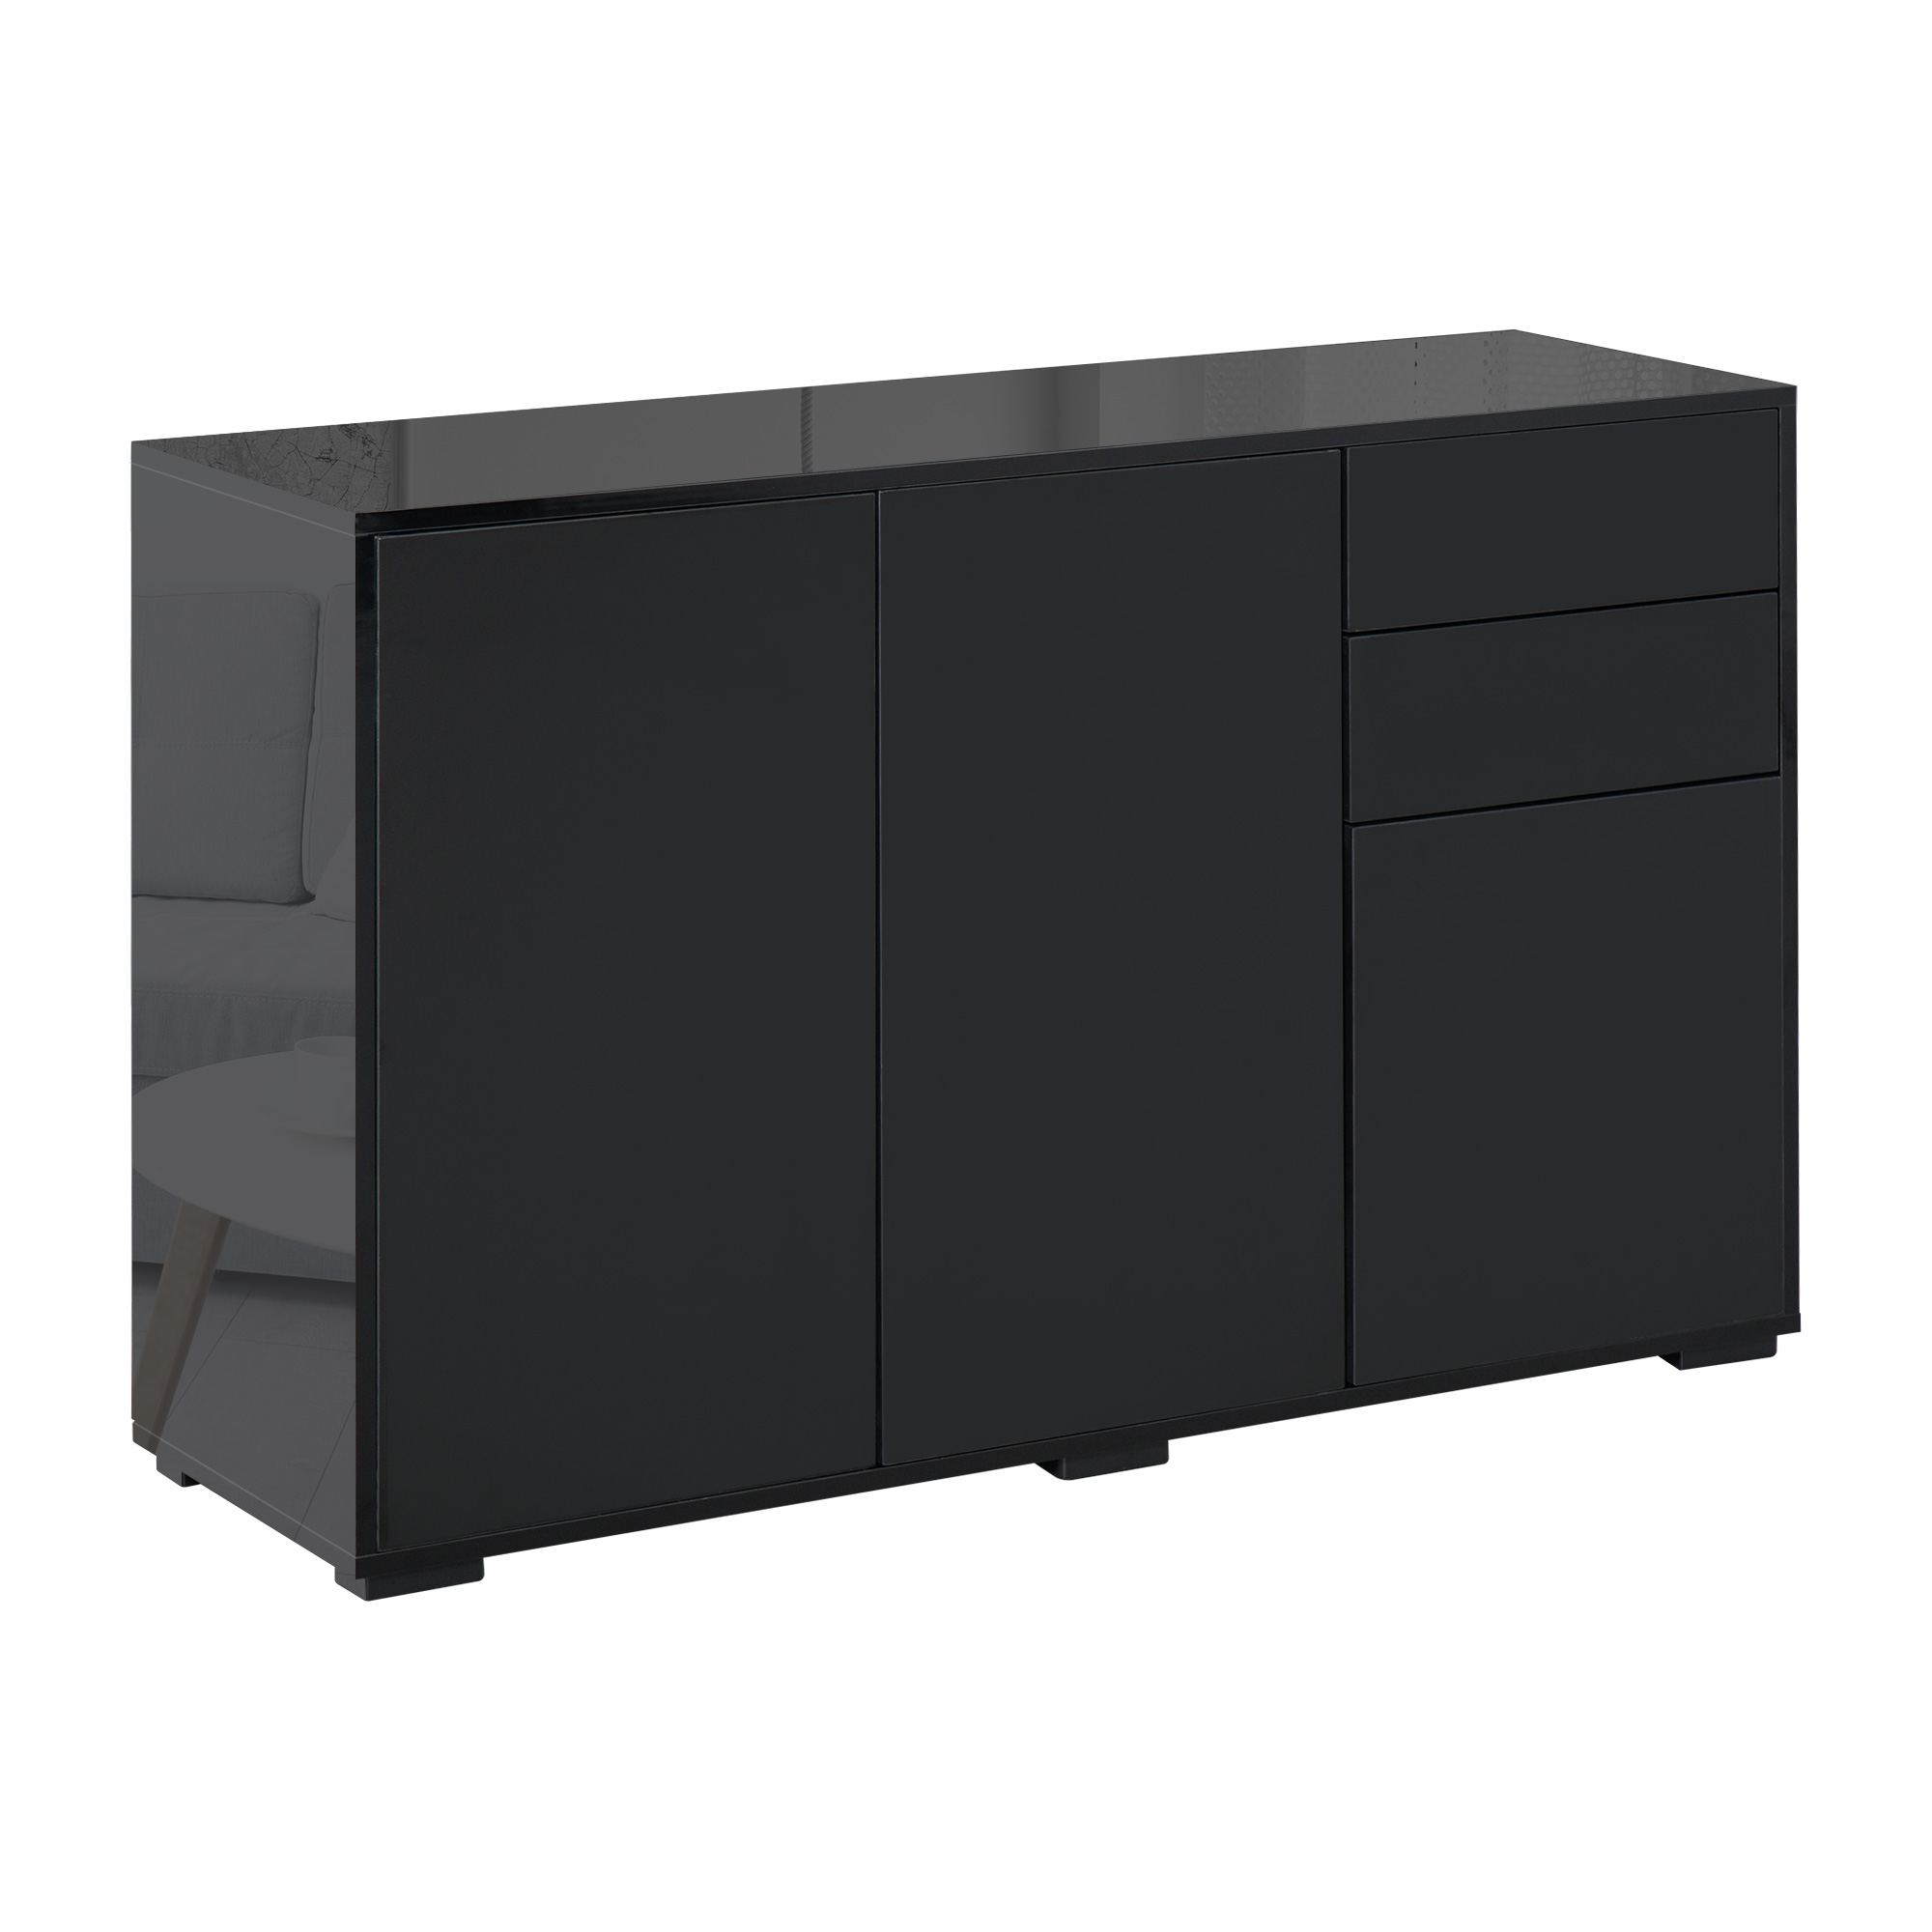 HOMCOM Μαύρο ντουλάπι πολλαπλών χρήσεων με 2 συρτάρια και 2 ντουλάπια push-open